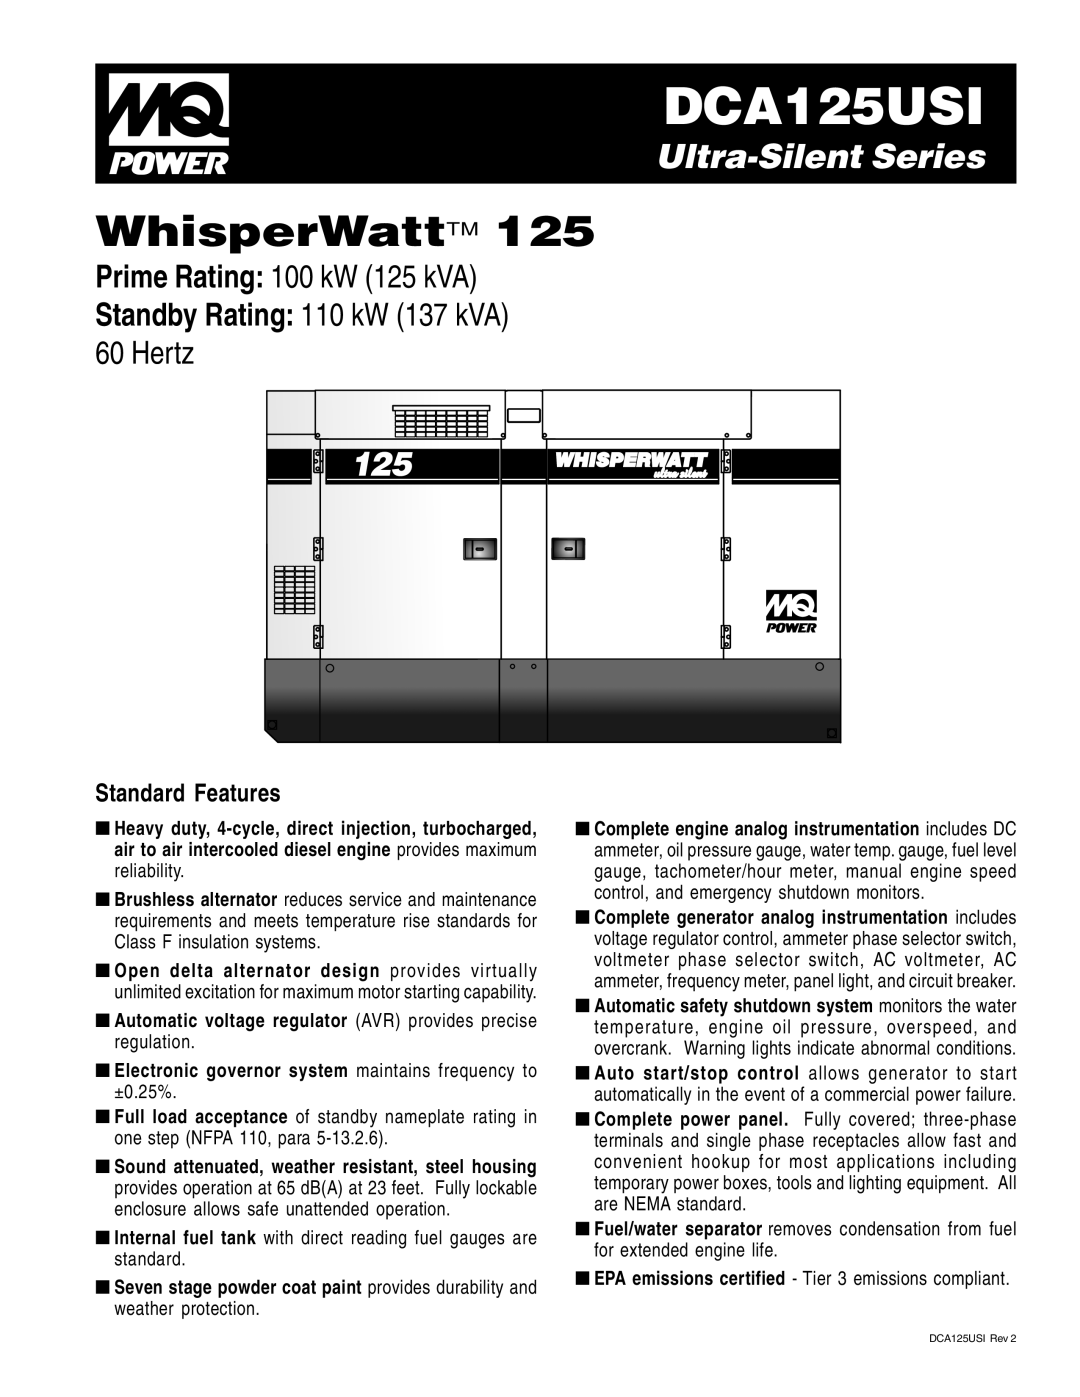 Multiquip DCA125USI manual Ultra-Silent Series, Standard Features, WhisperWattTM, Prime Rating 100 kW 125 kVA, Hertz 